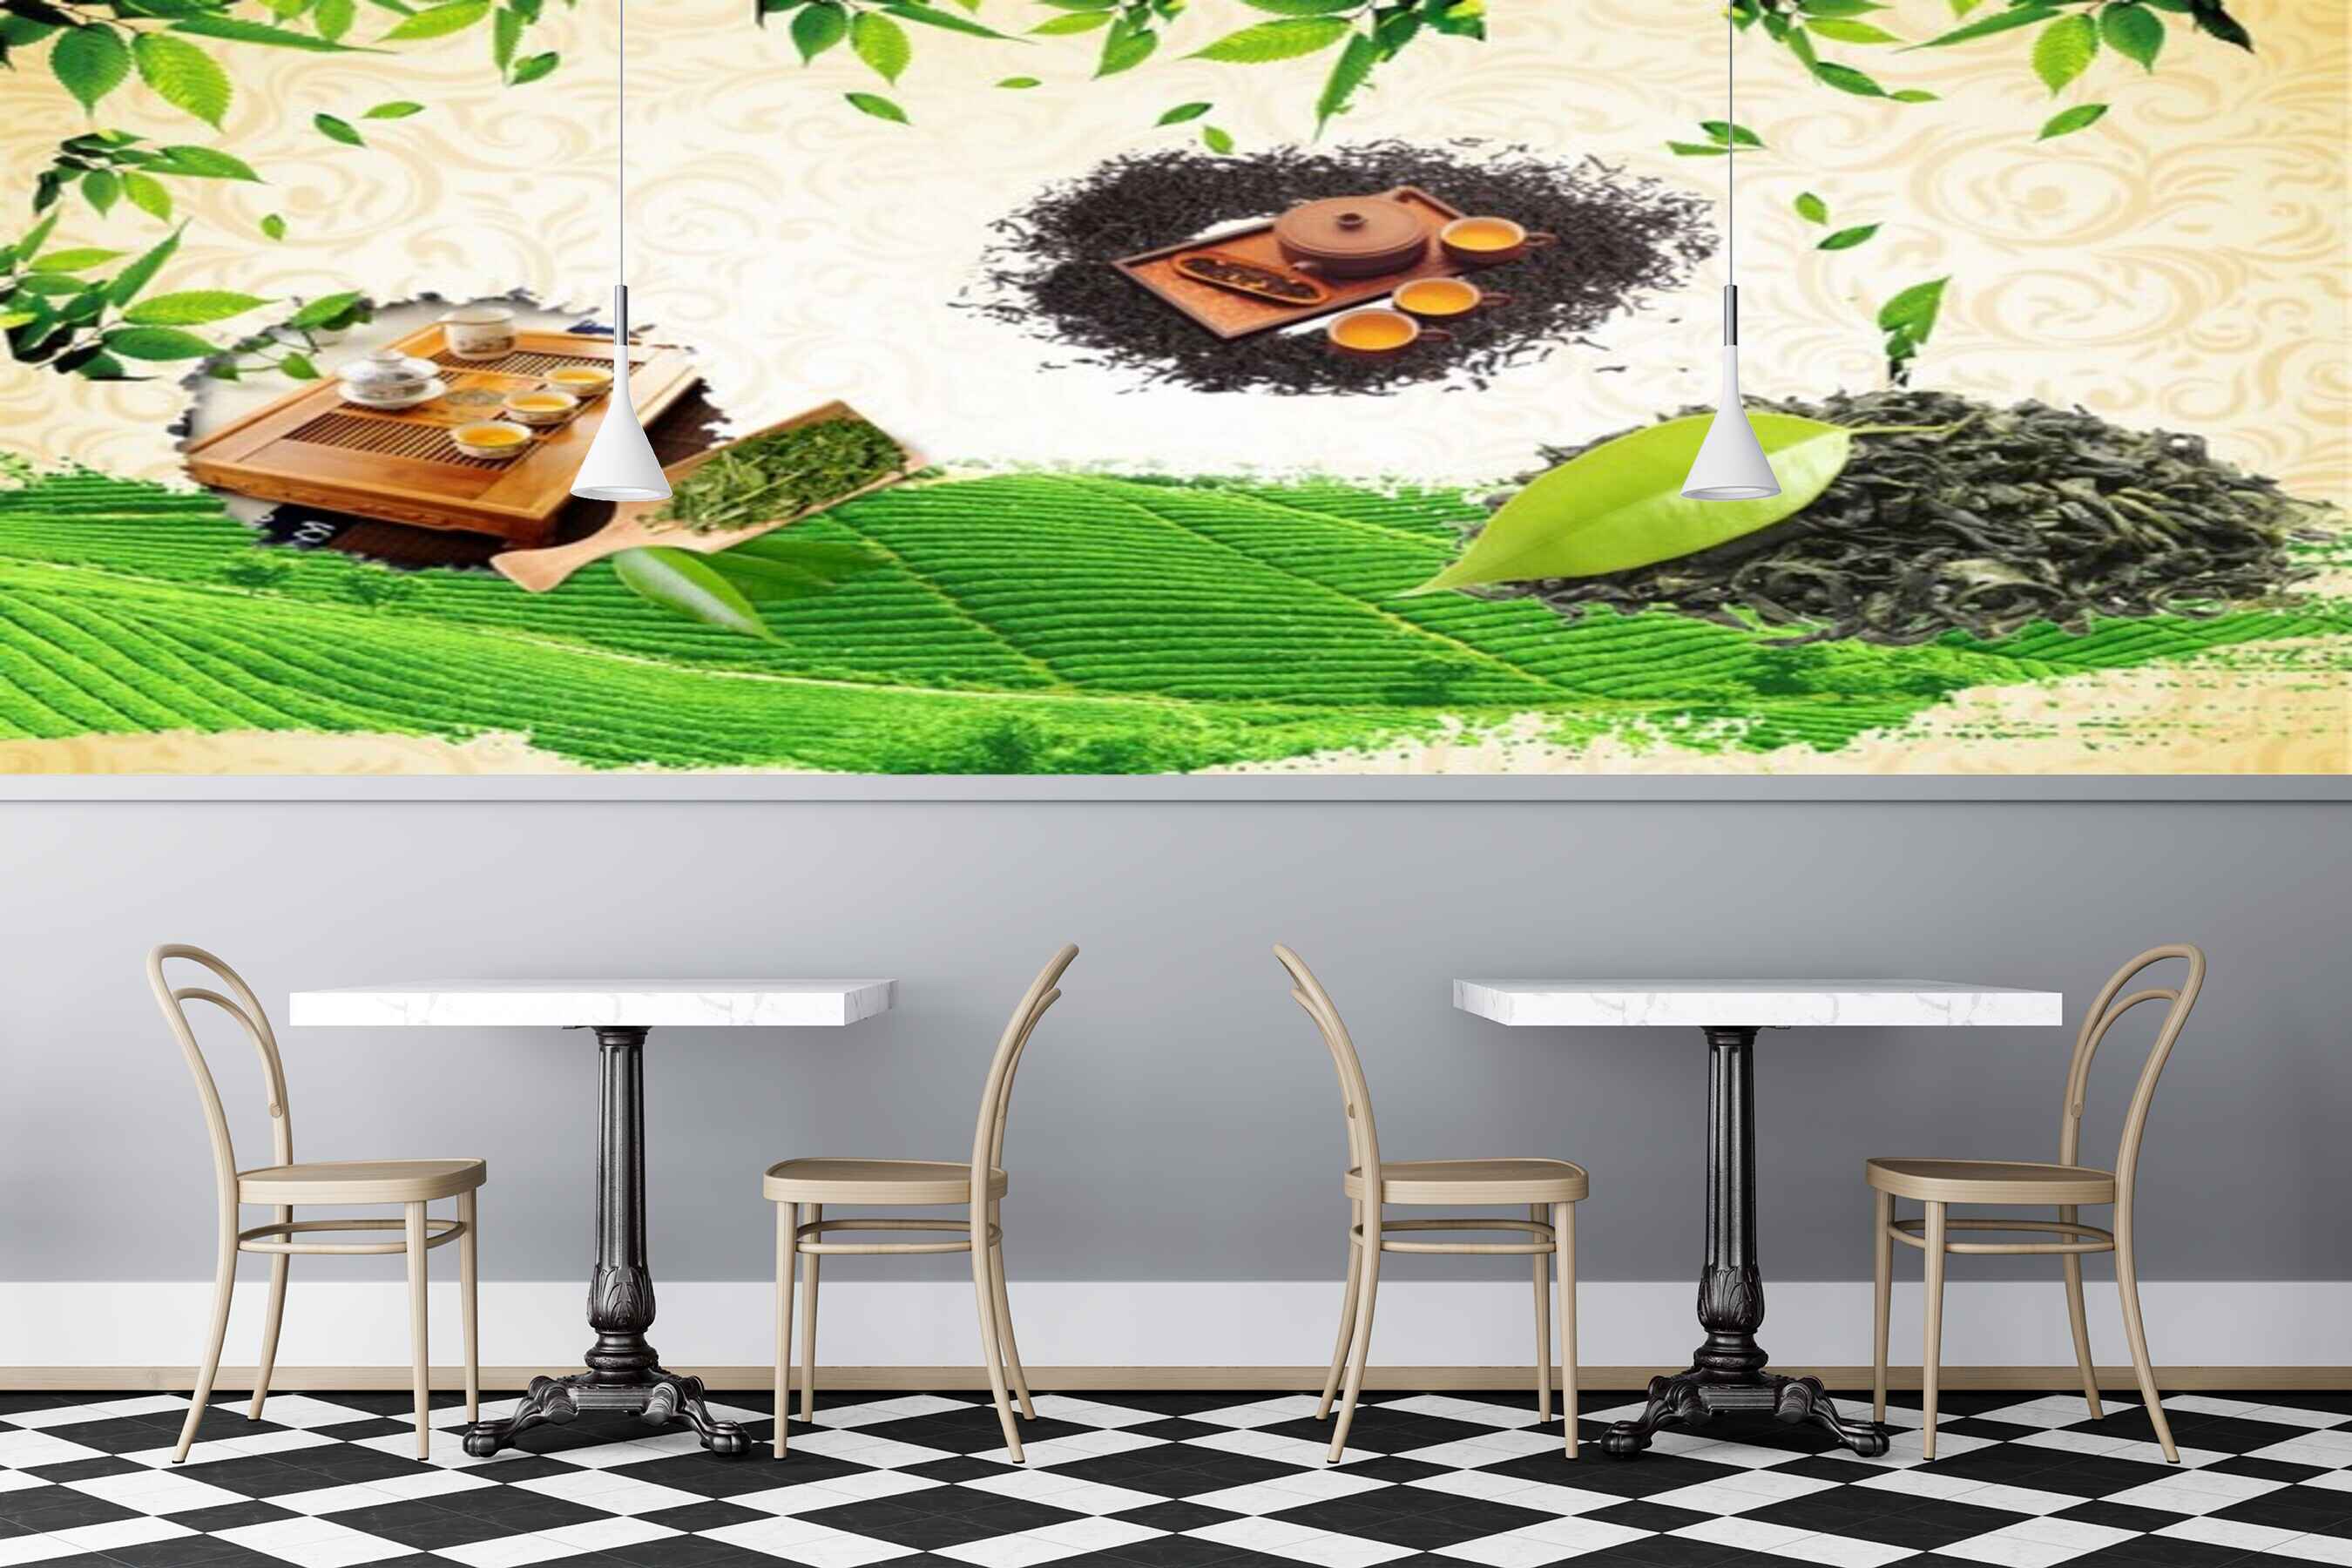 Avikalp MWZ3106 Leaves Herbs Spices Drinks HD Wallpaper for Cafe Restaurant